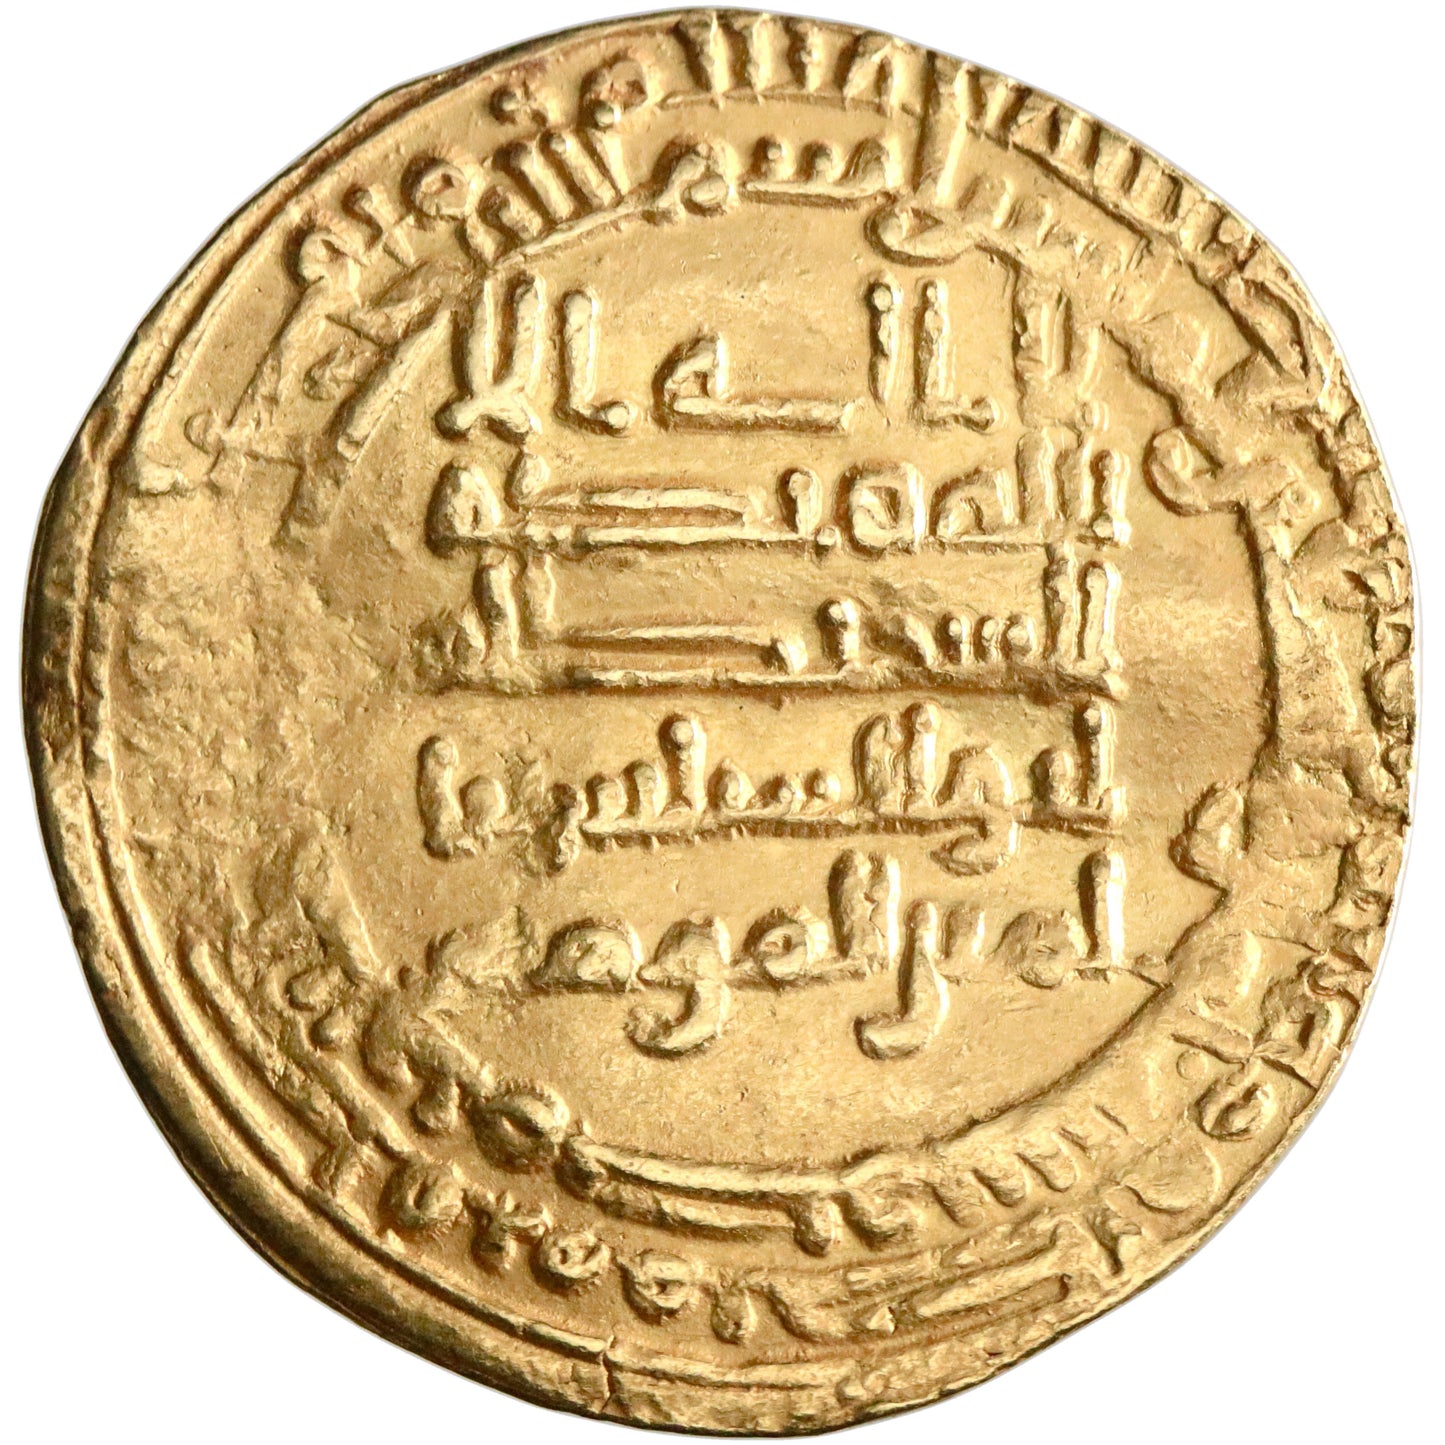 Abbasid, al-Muqtadir, gold dinar, Misr (Egypt) mint, AH 298, citing Abu al-'Abbas